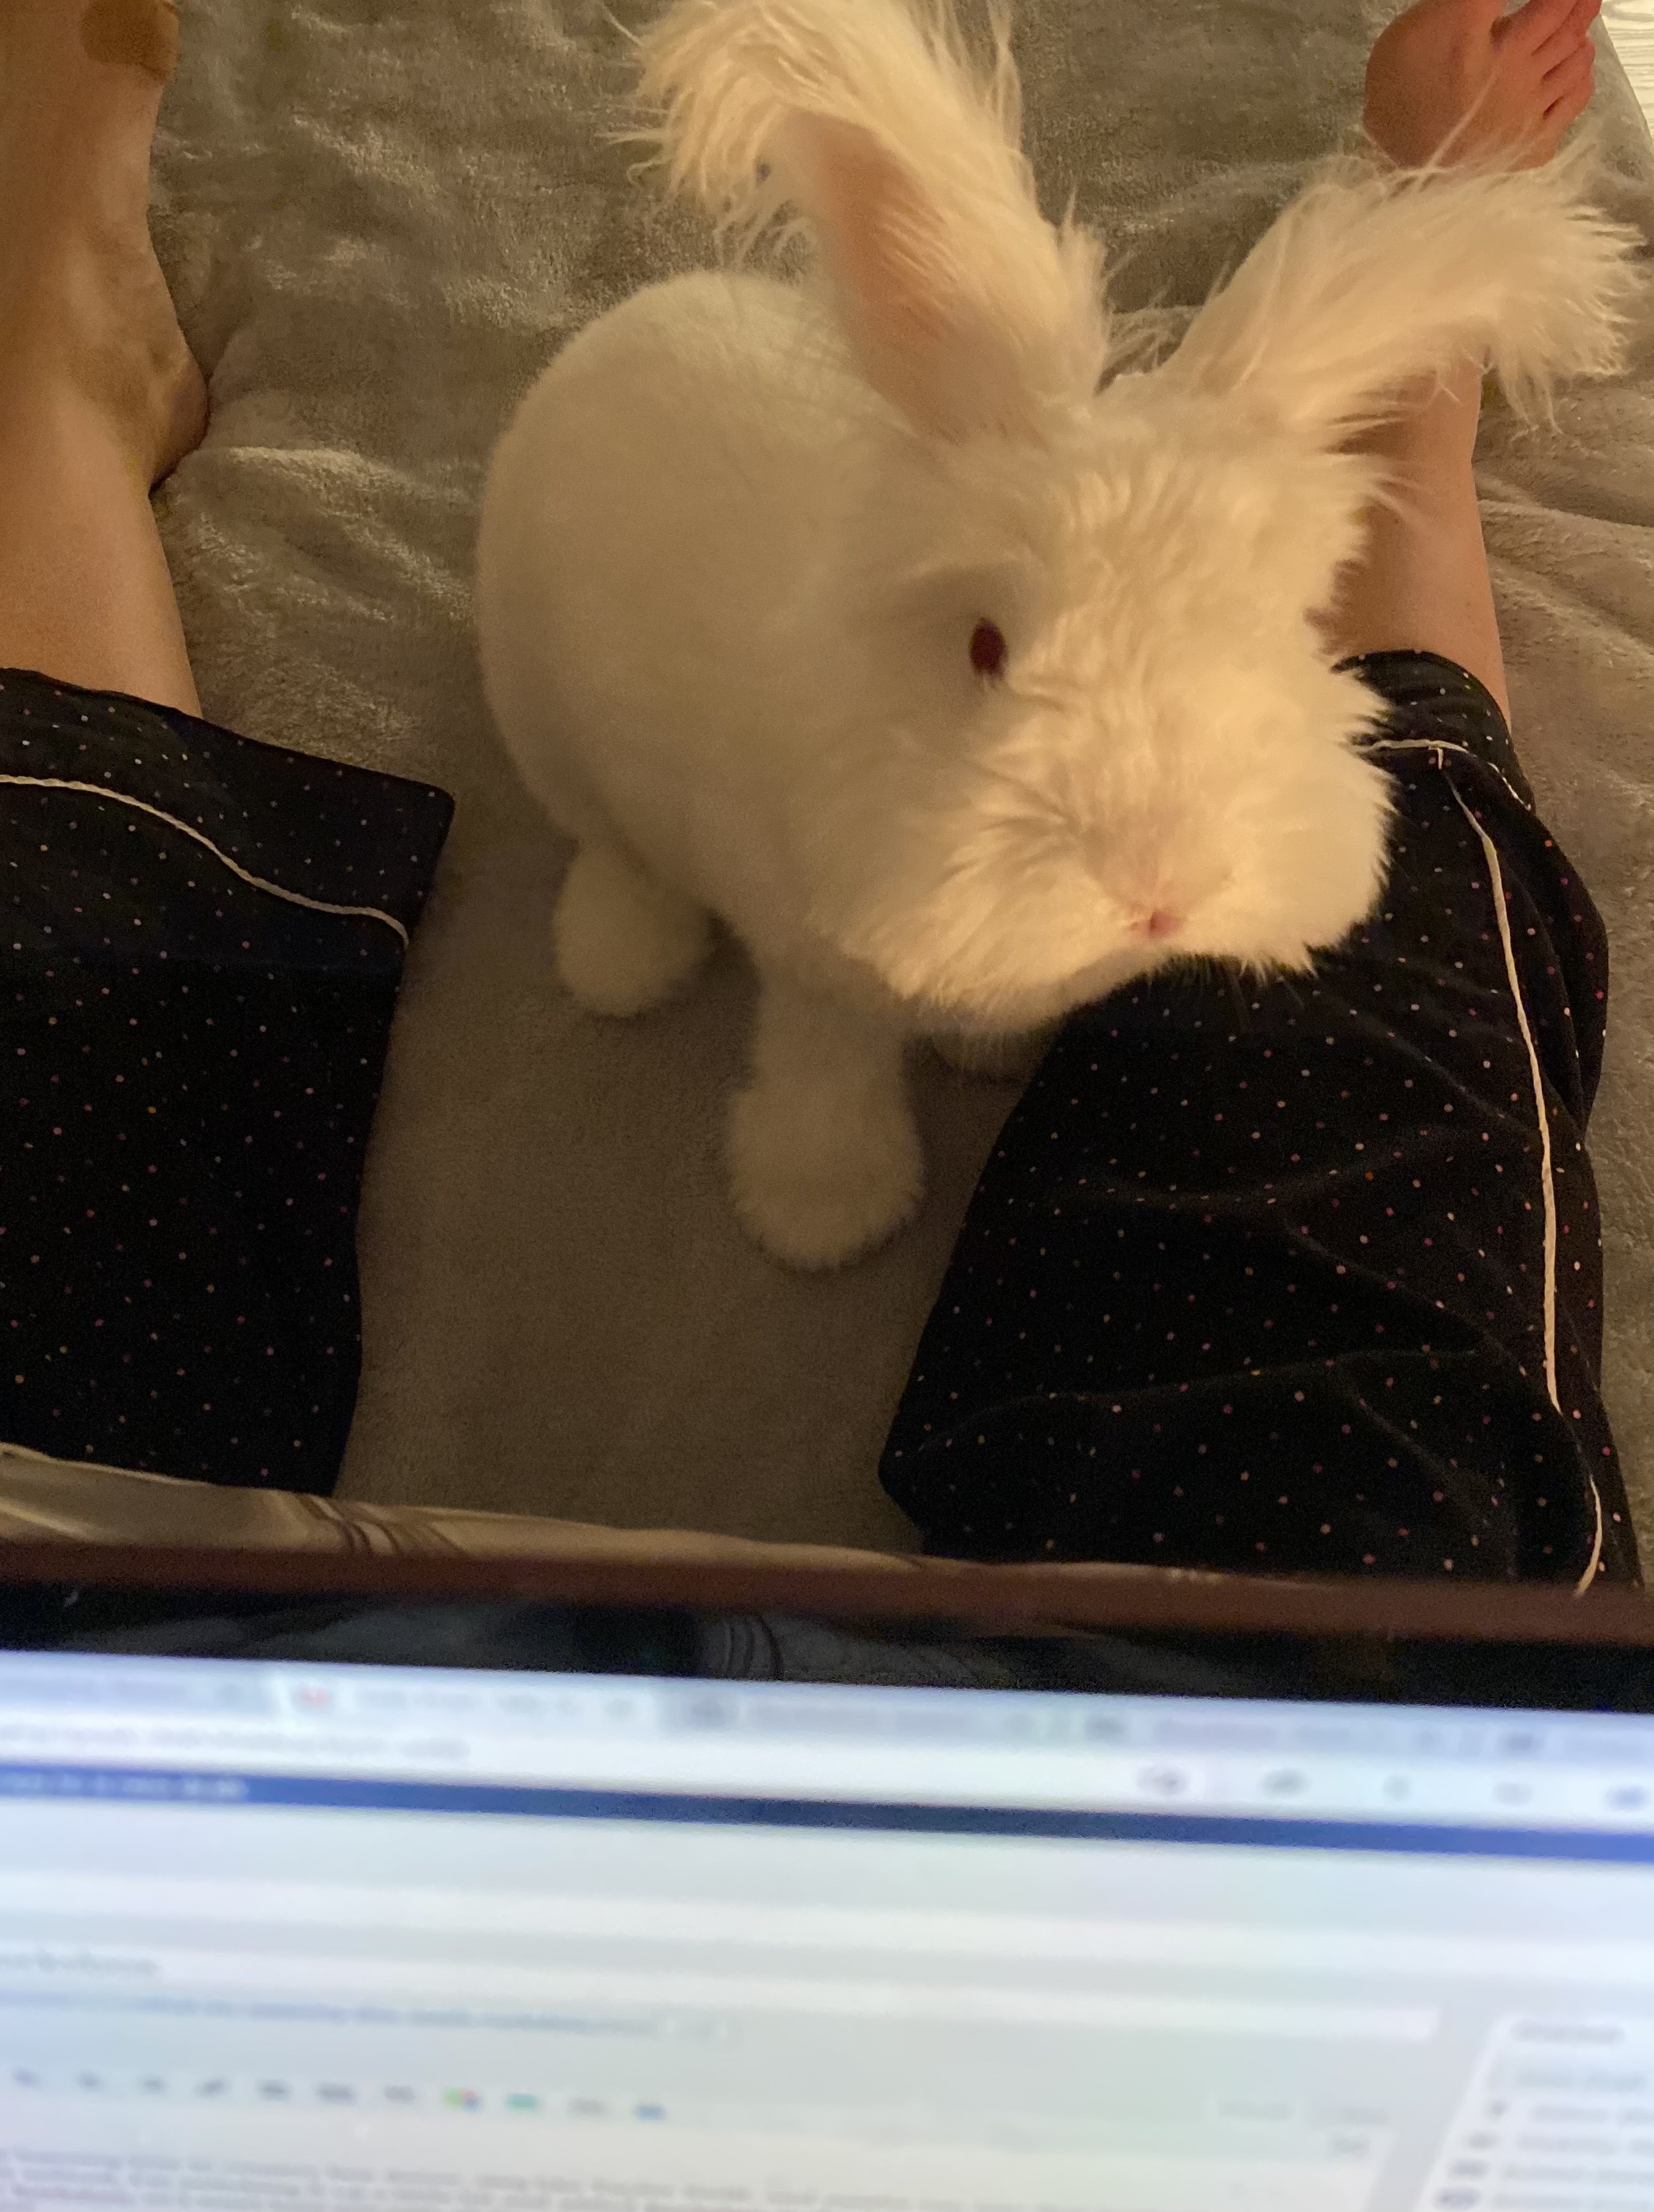 Bunny rabbit and laptop